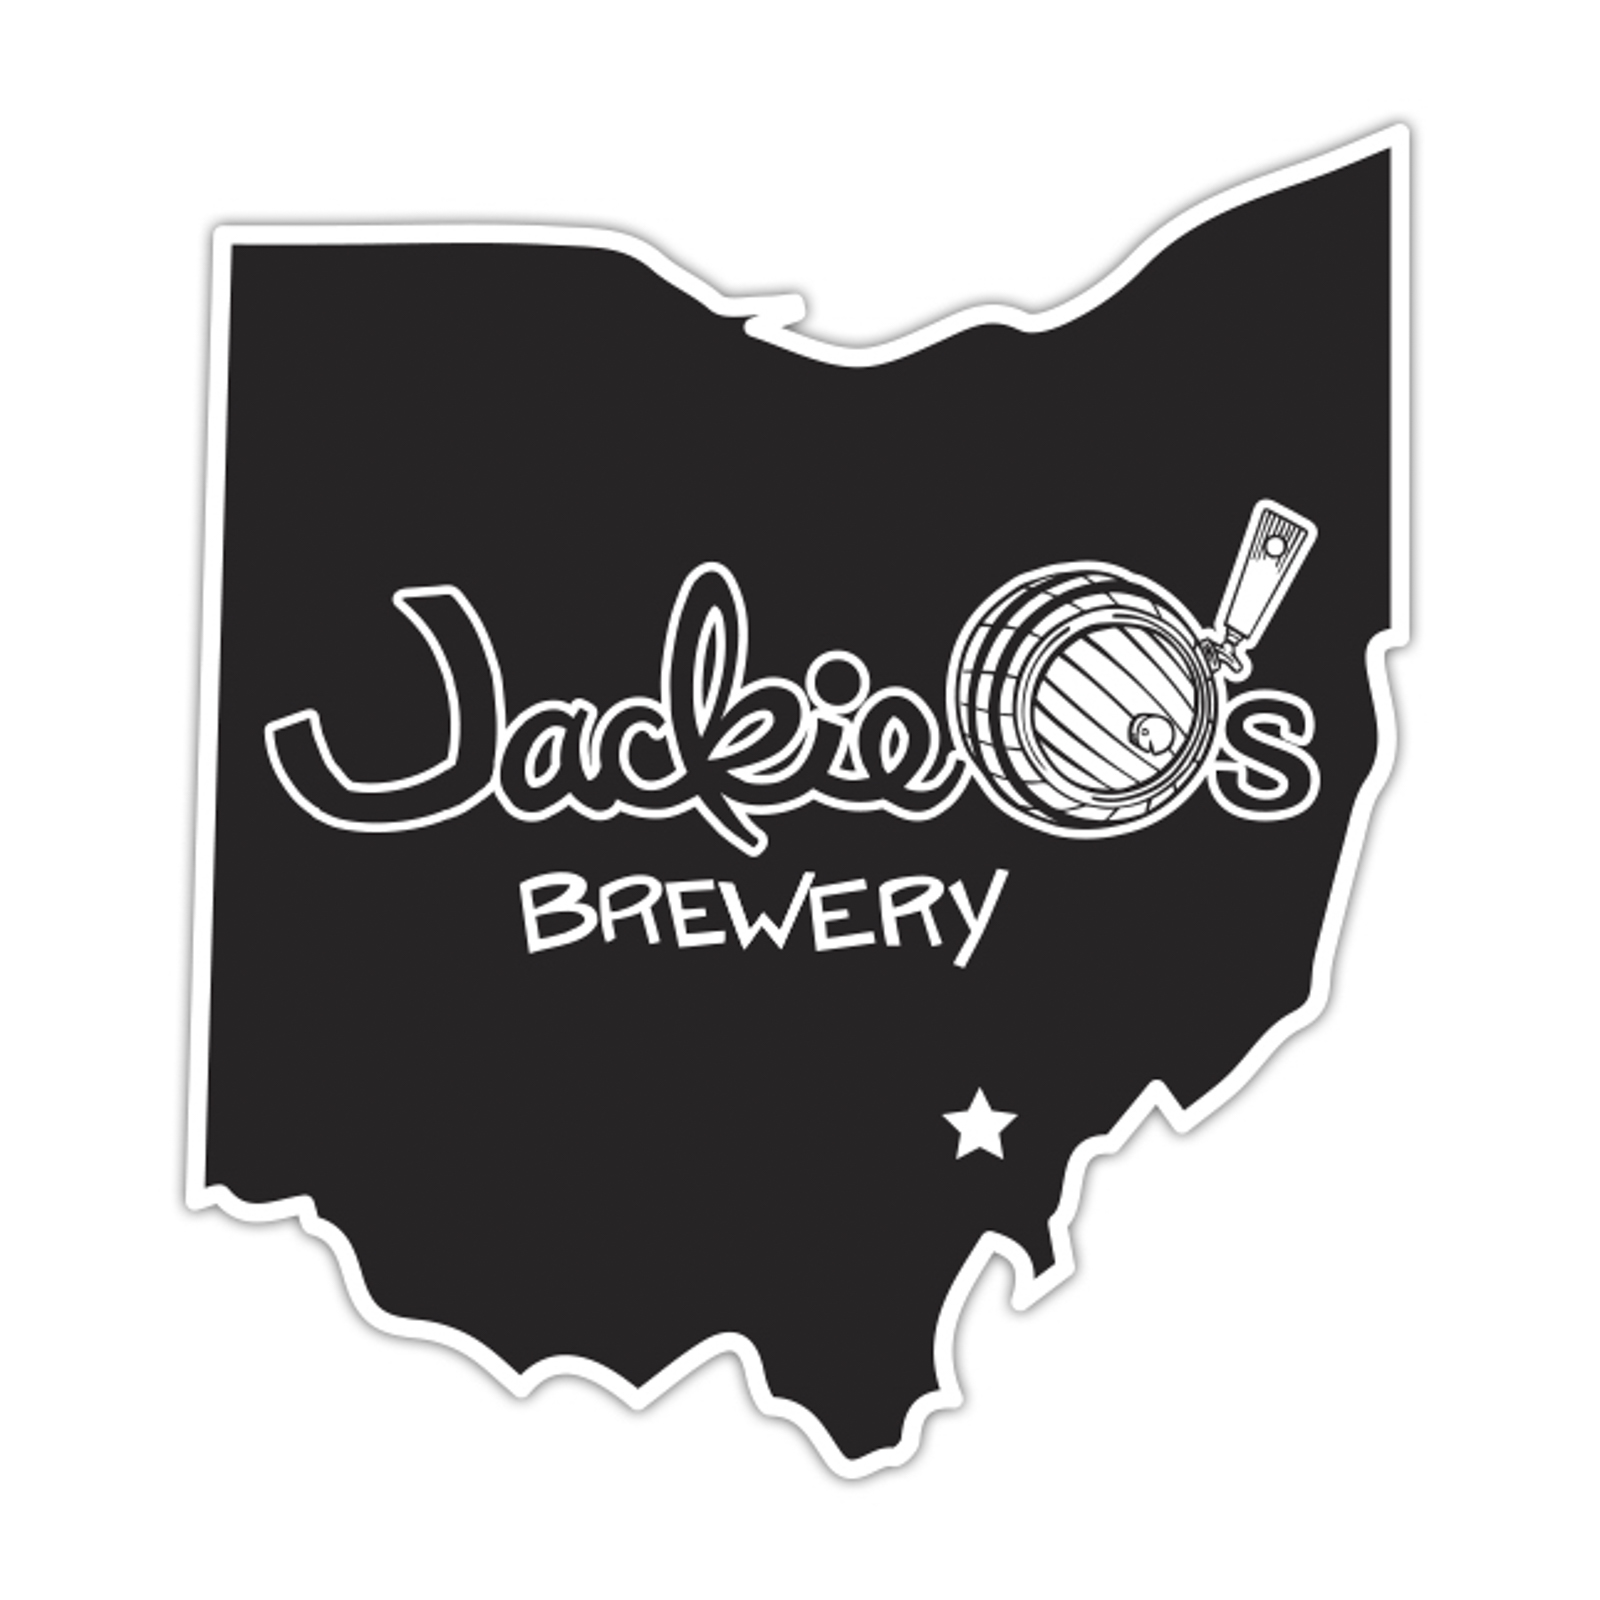 JACKIE O'S PUB Ohio Black Logo STICKER decal craft beer brewery brewing 